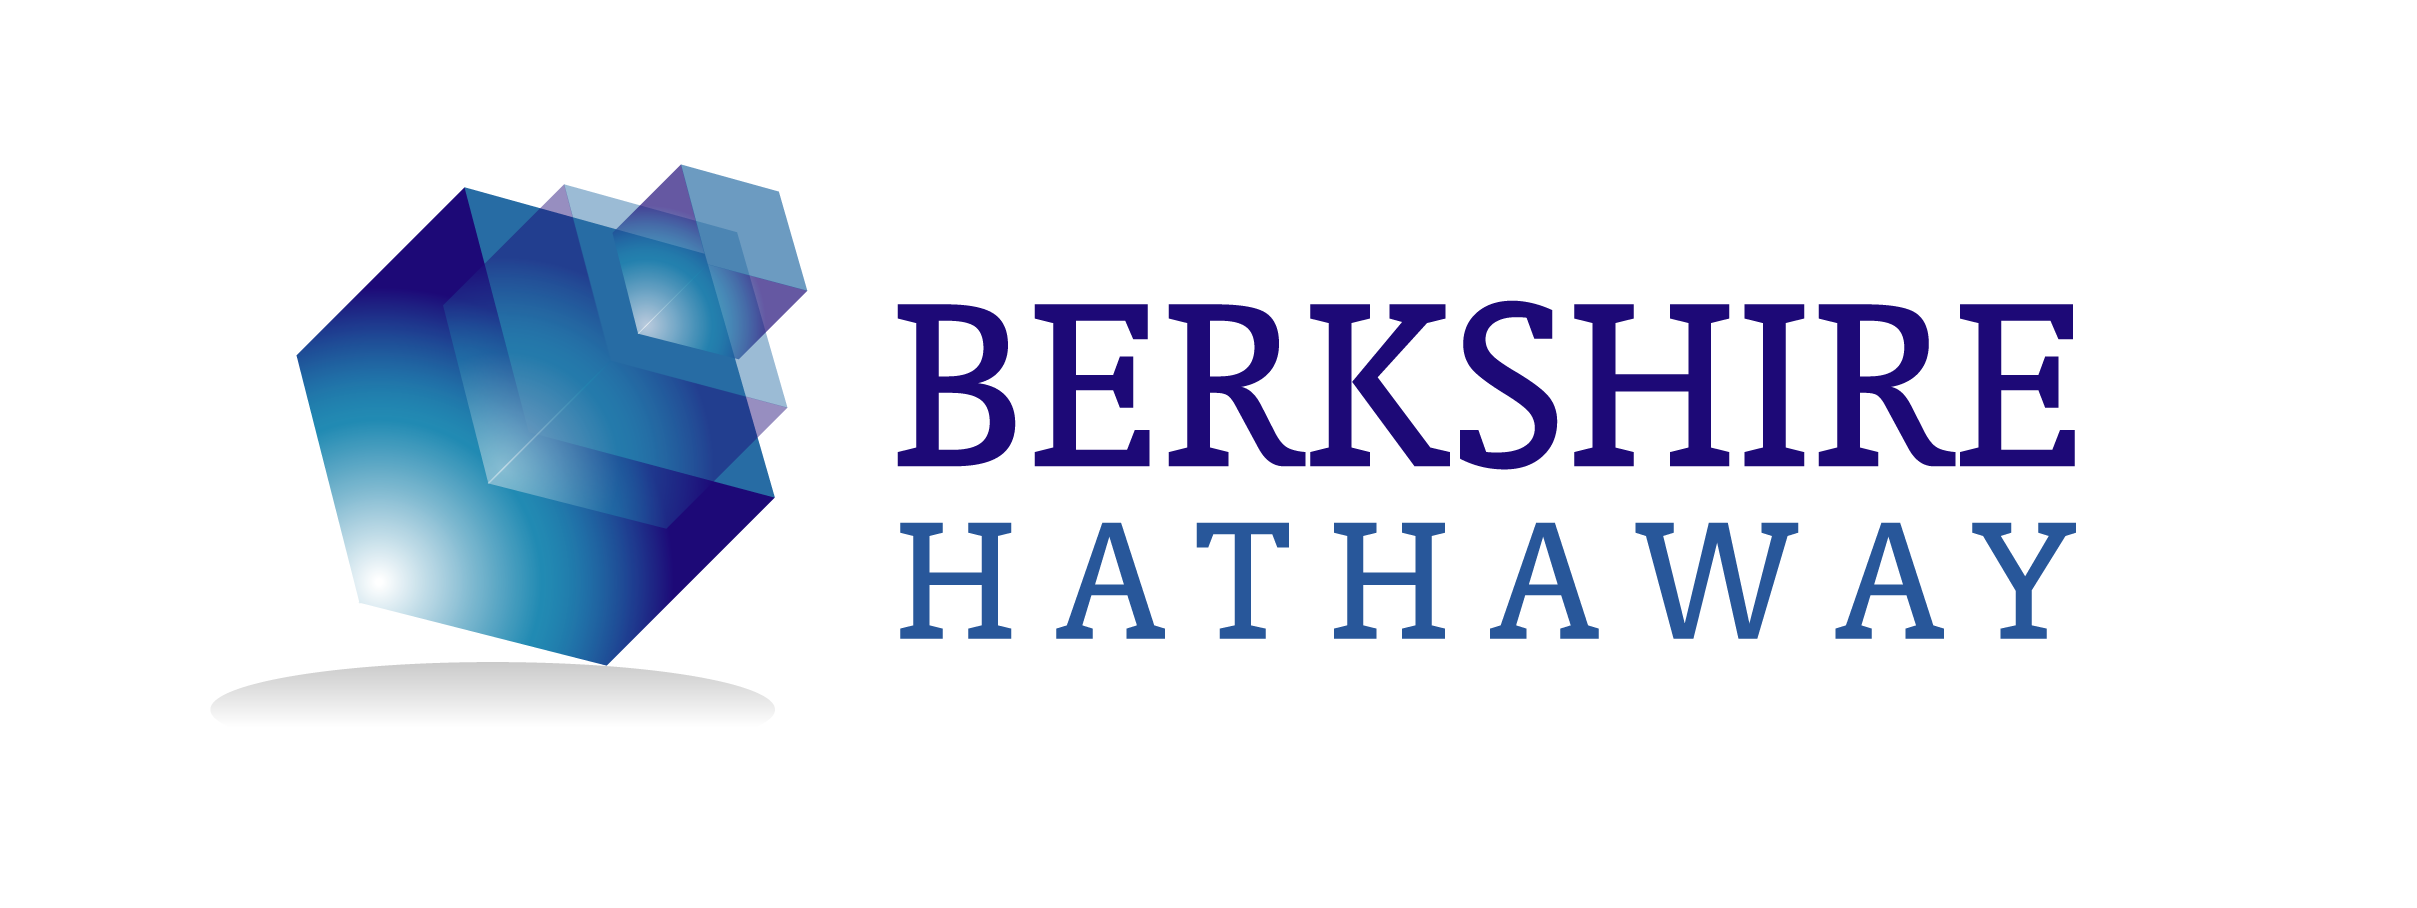 Berkshire Hathaway BRK.A logo